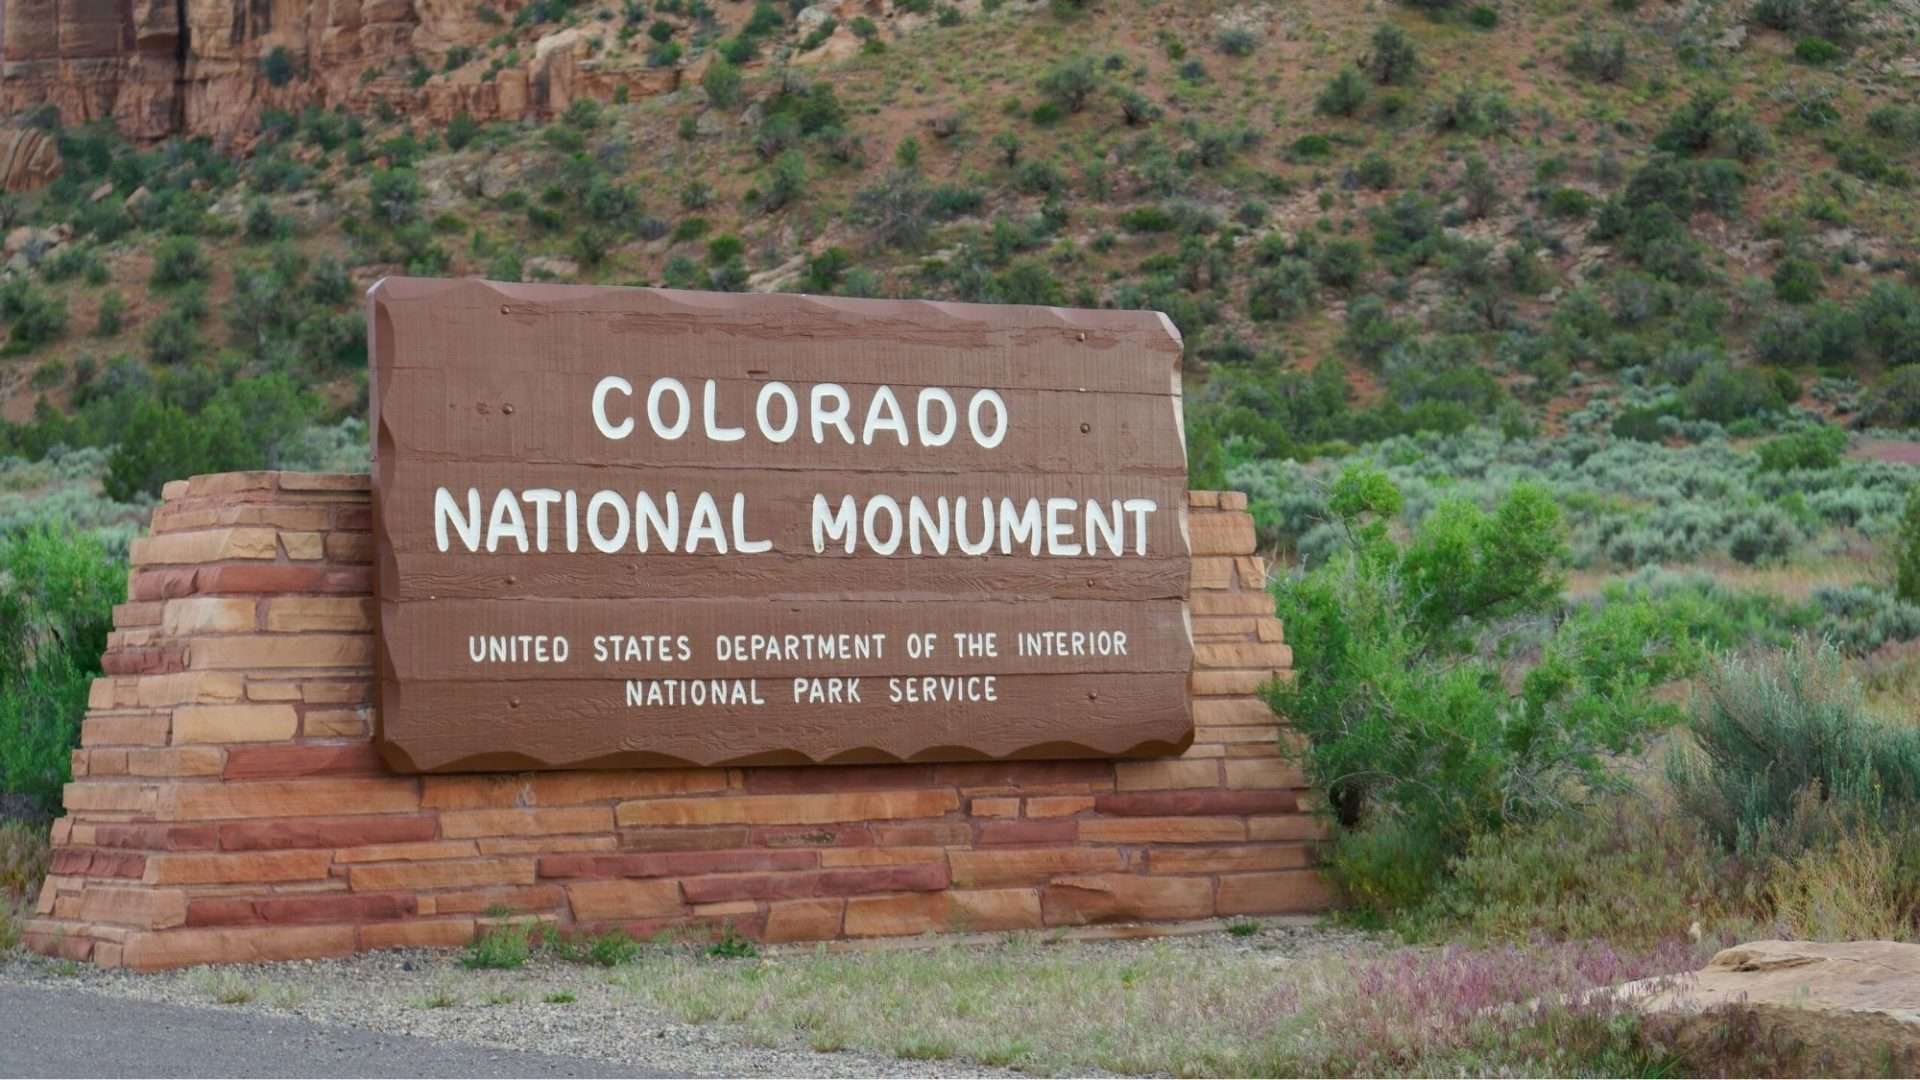 Colorado National Monument entrance sign